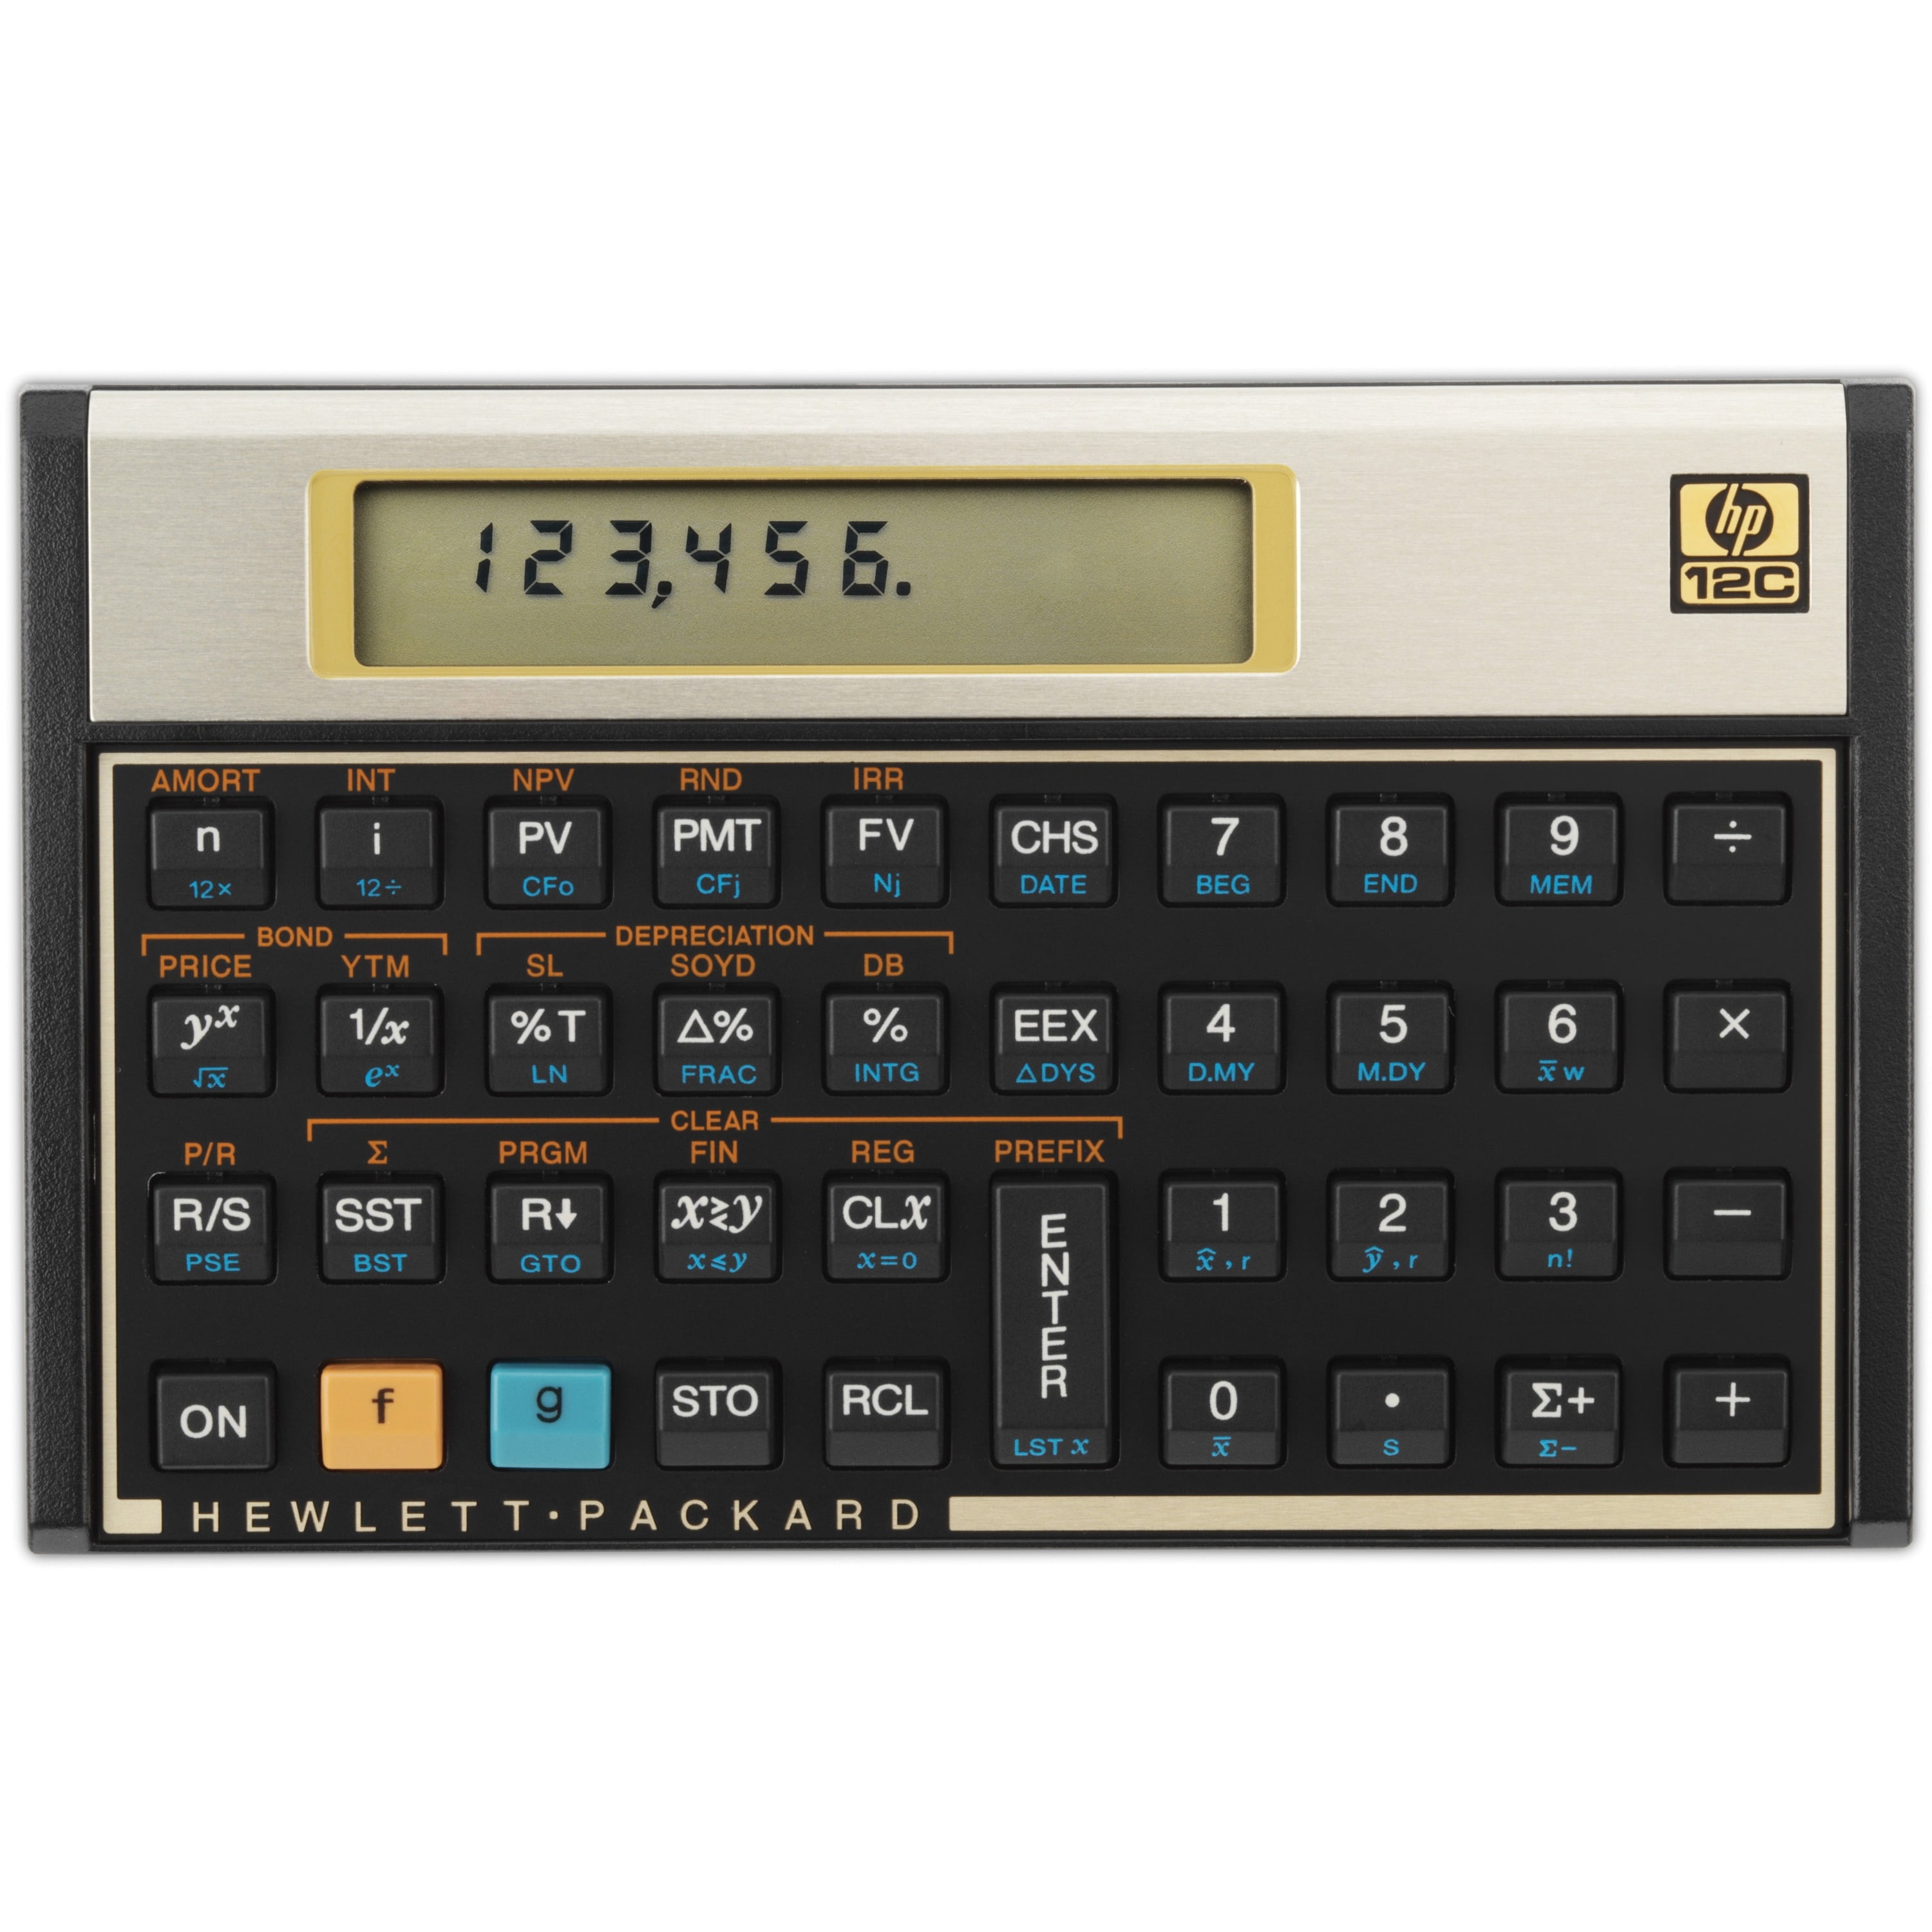 HP 17bII+ Financial Calculator, 22-Digit LCD - Walmart.com